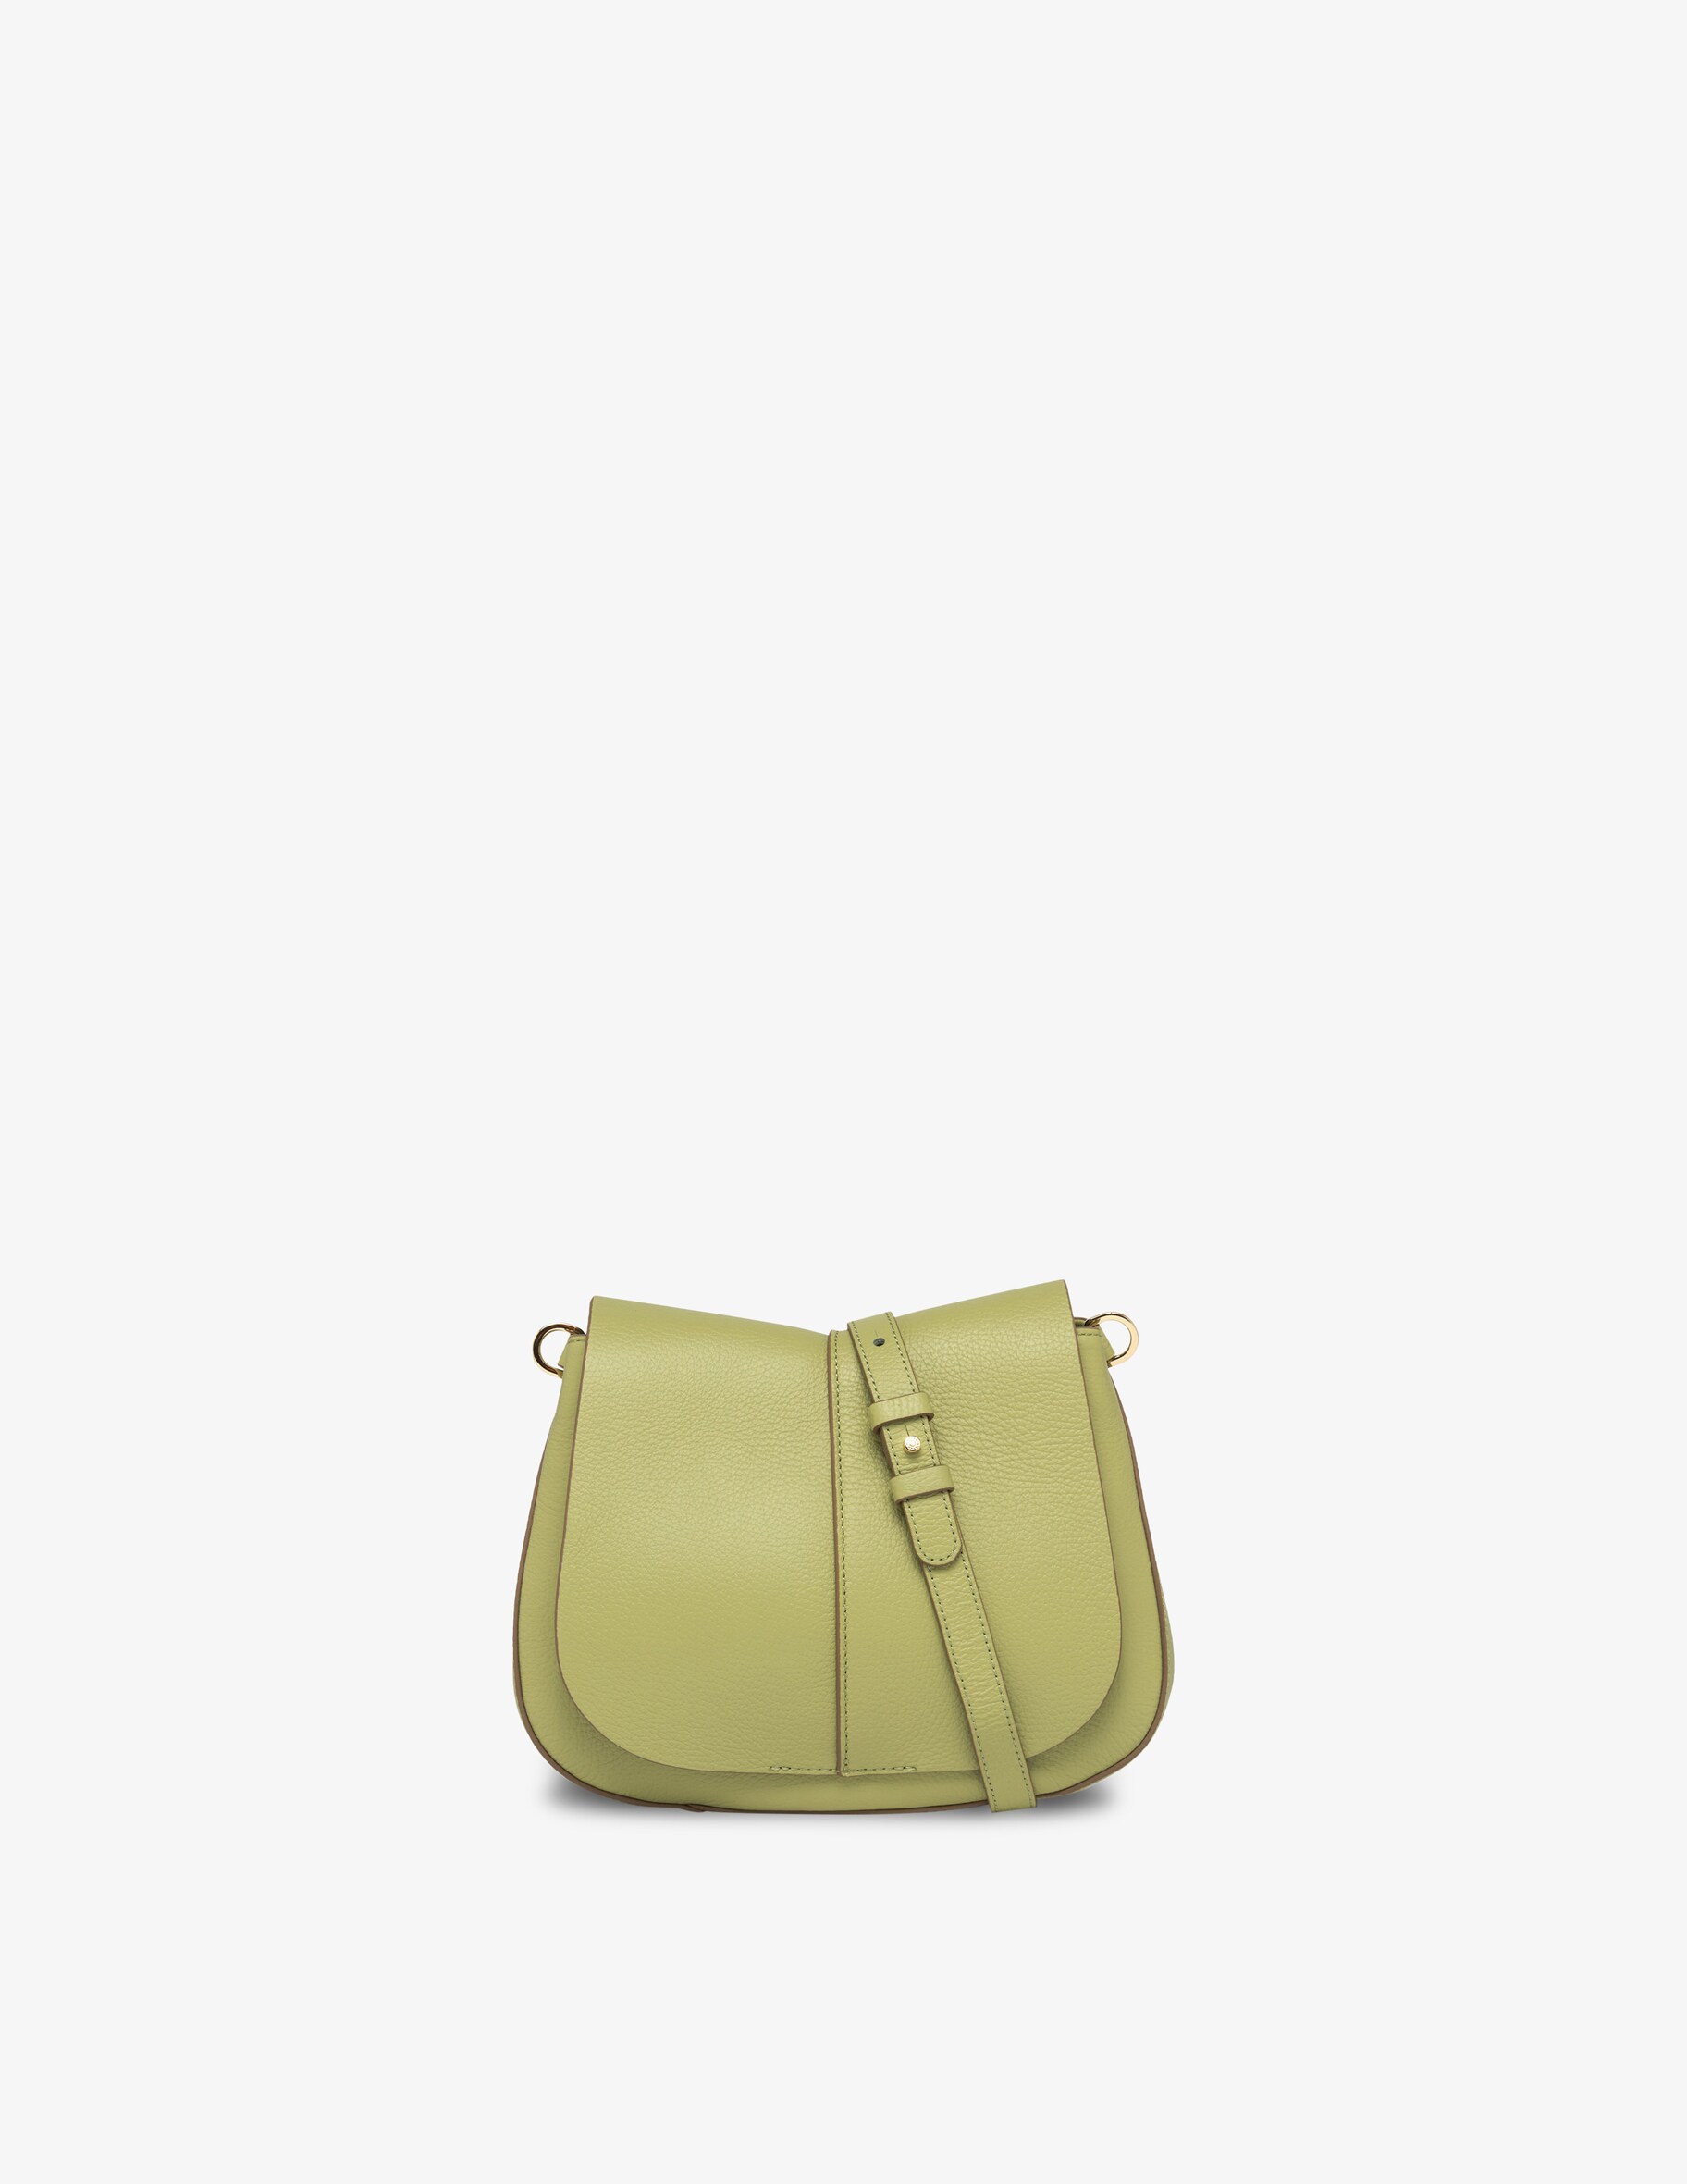 Сумка через плечо Helena S Gianni Chiarini Firenze, зеленый сумка superlight gianni chiarini цвет natural